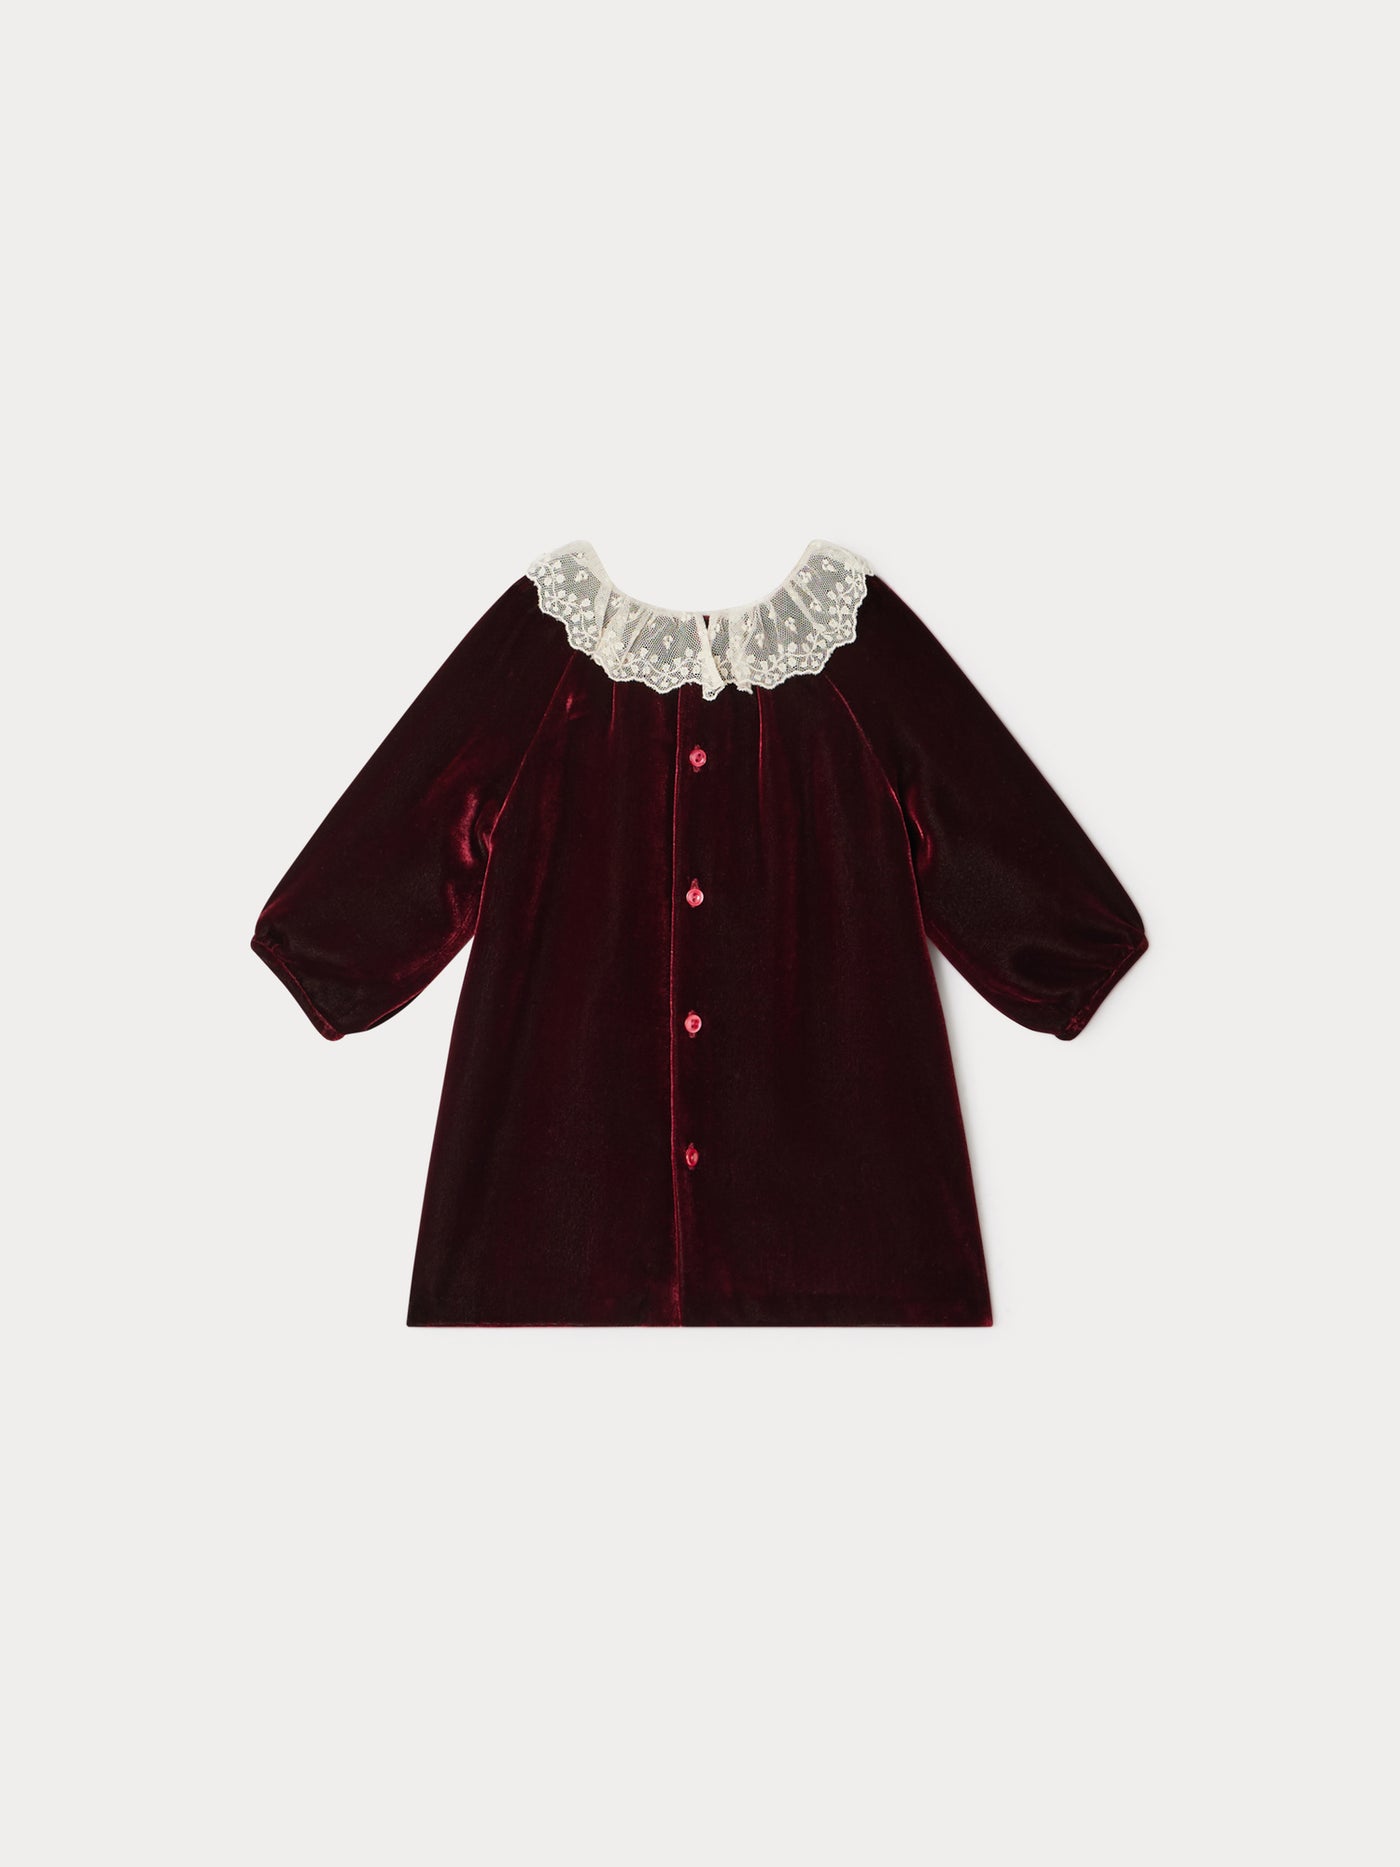 Flavili Dress burgundy